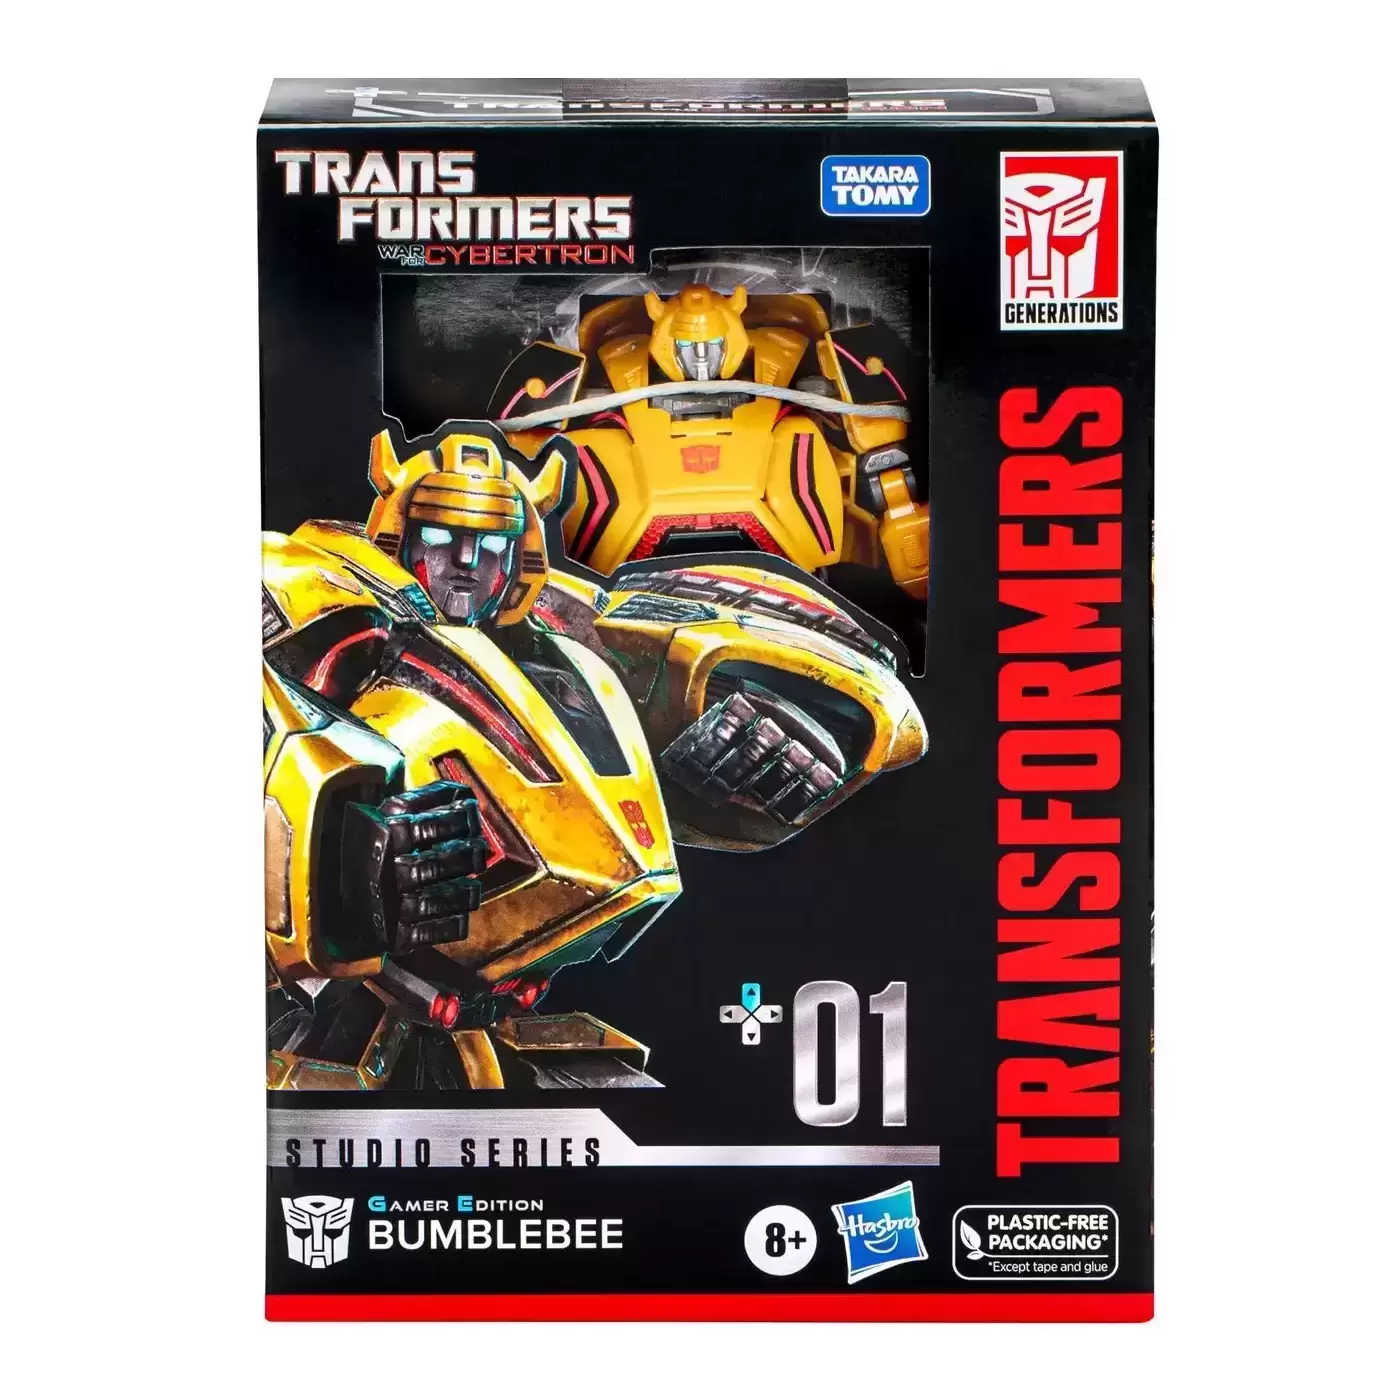 Transformers Studio Series - Bumblebee (Gamer Edition)